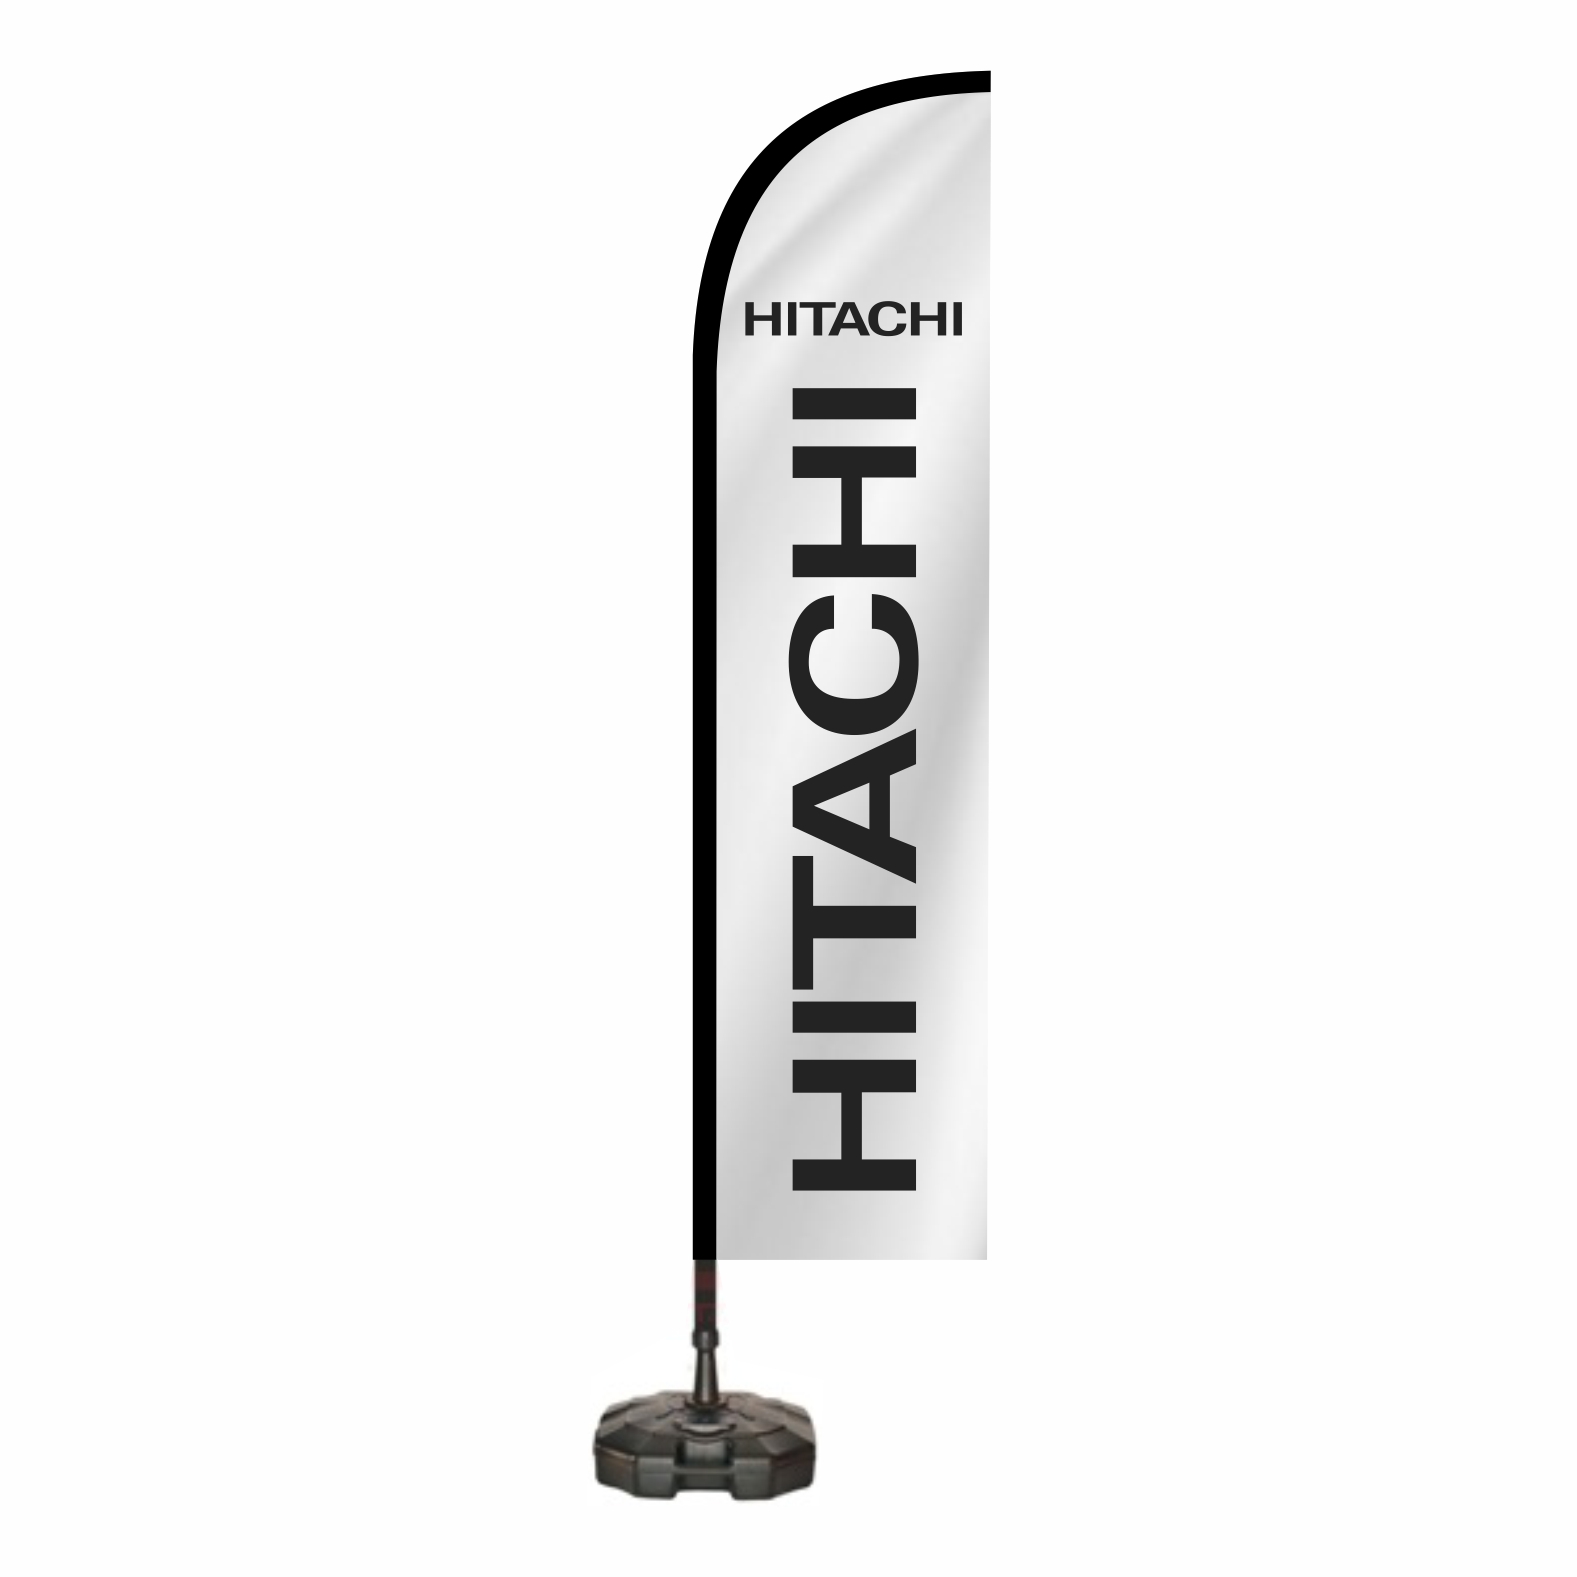 Hitachi Reklam Bayra zellii